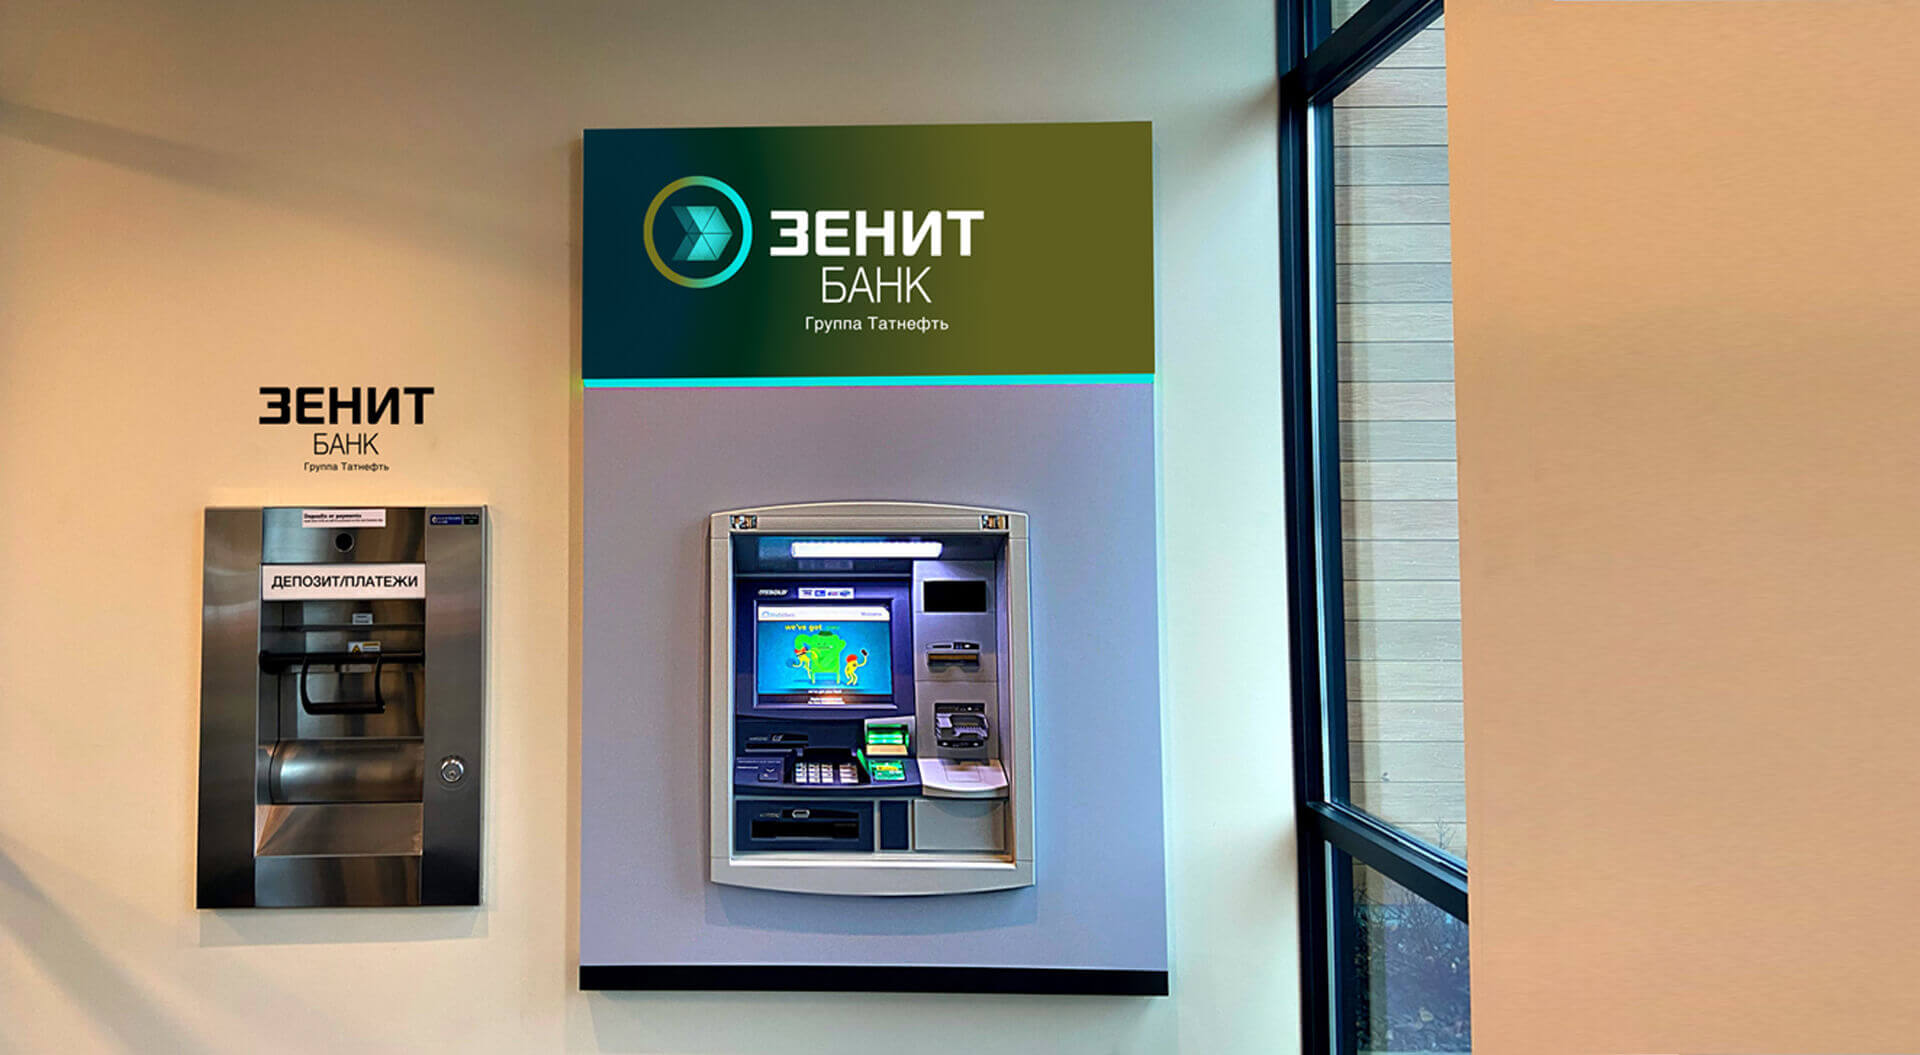 Zenit Bank Russia, Graphic Design ATM’s Retail Branding, Brand Identity, Retail Interior Design - CampbellRigg Agency